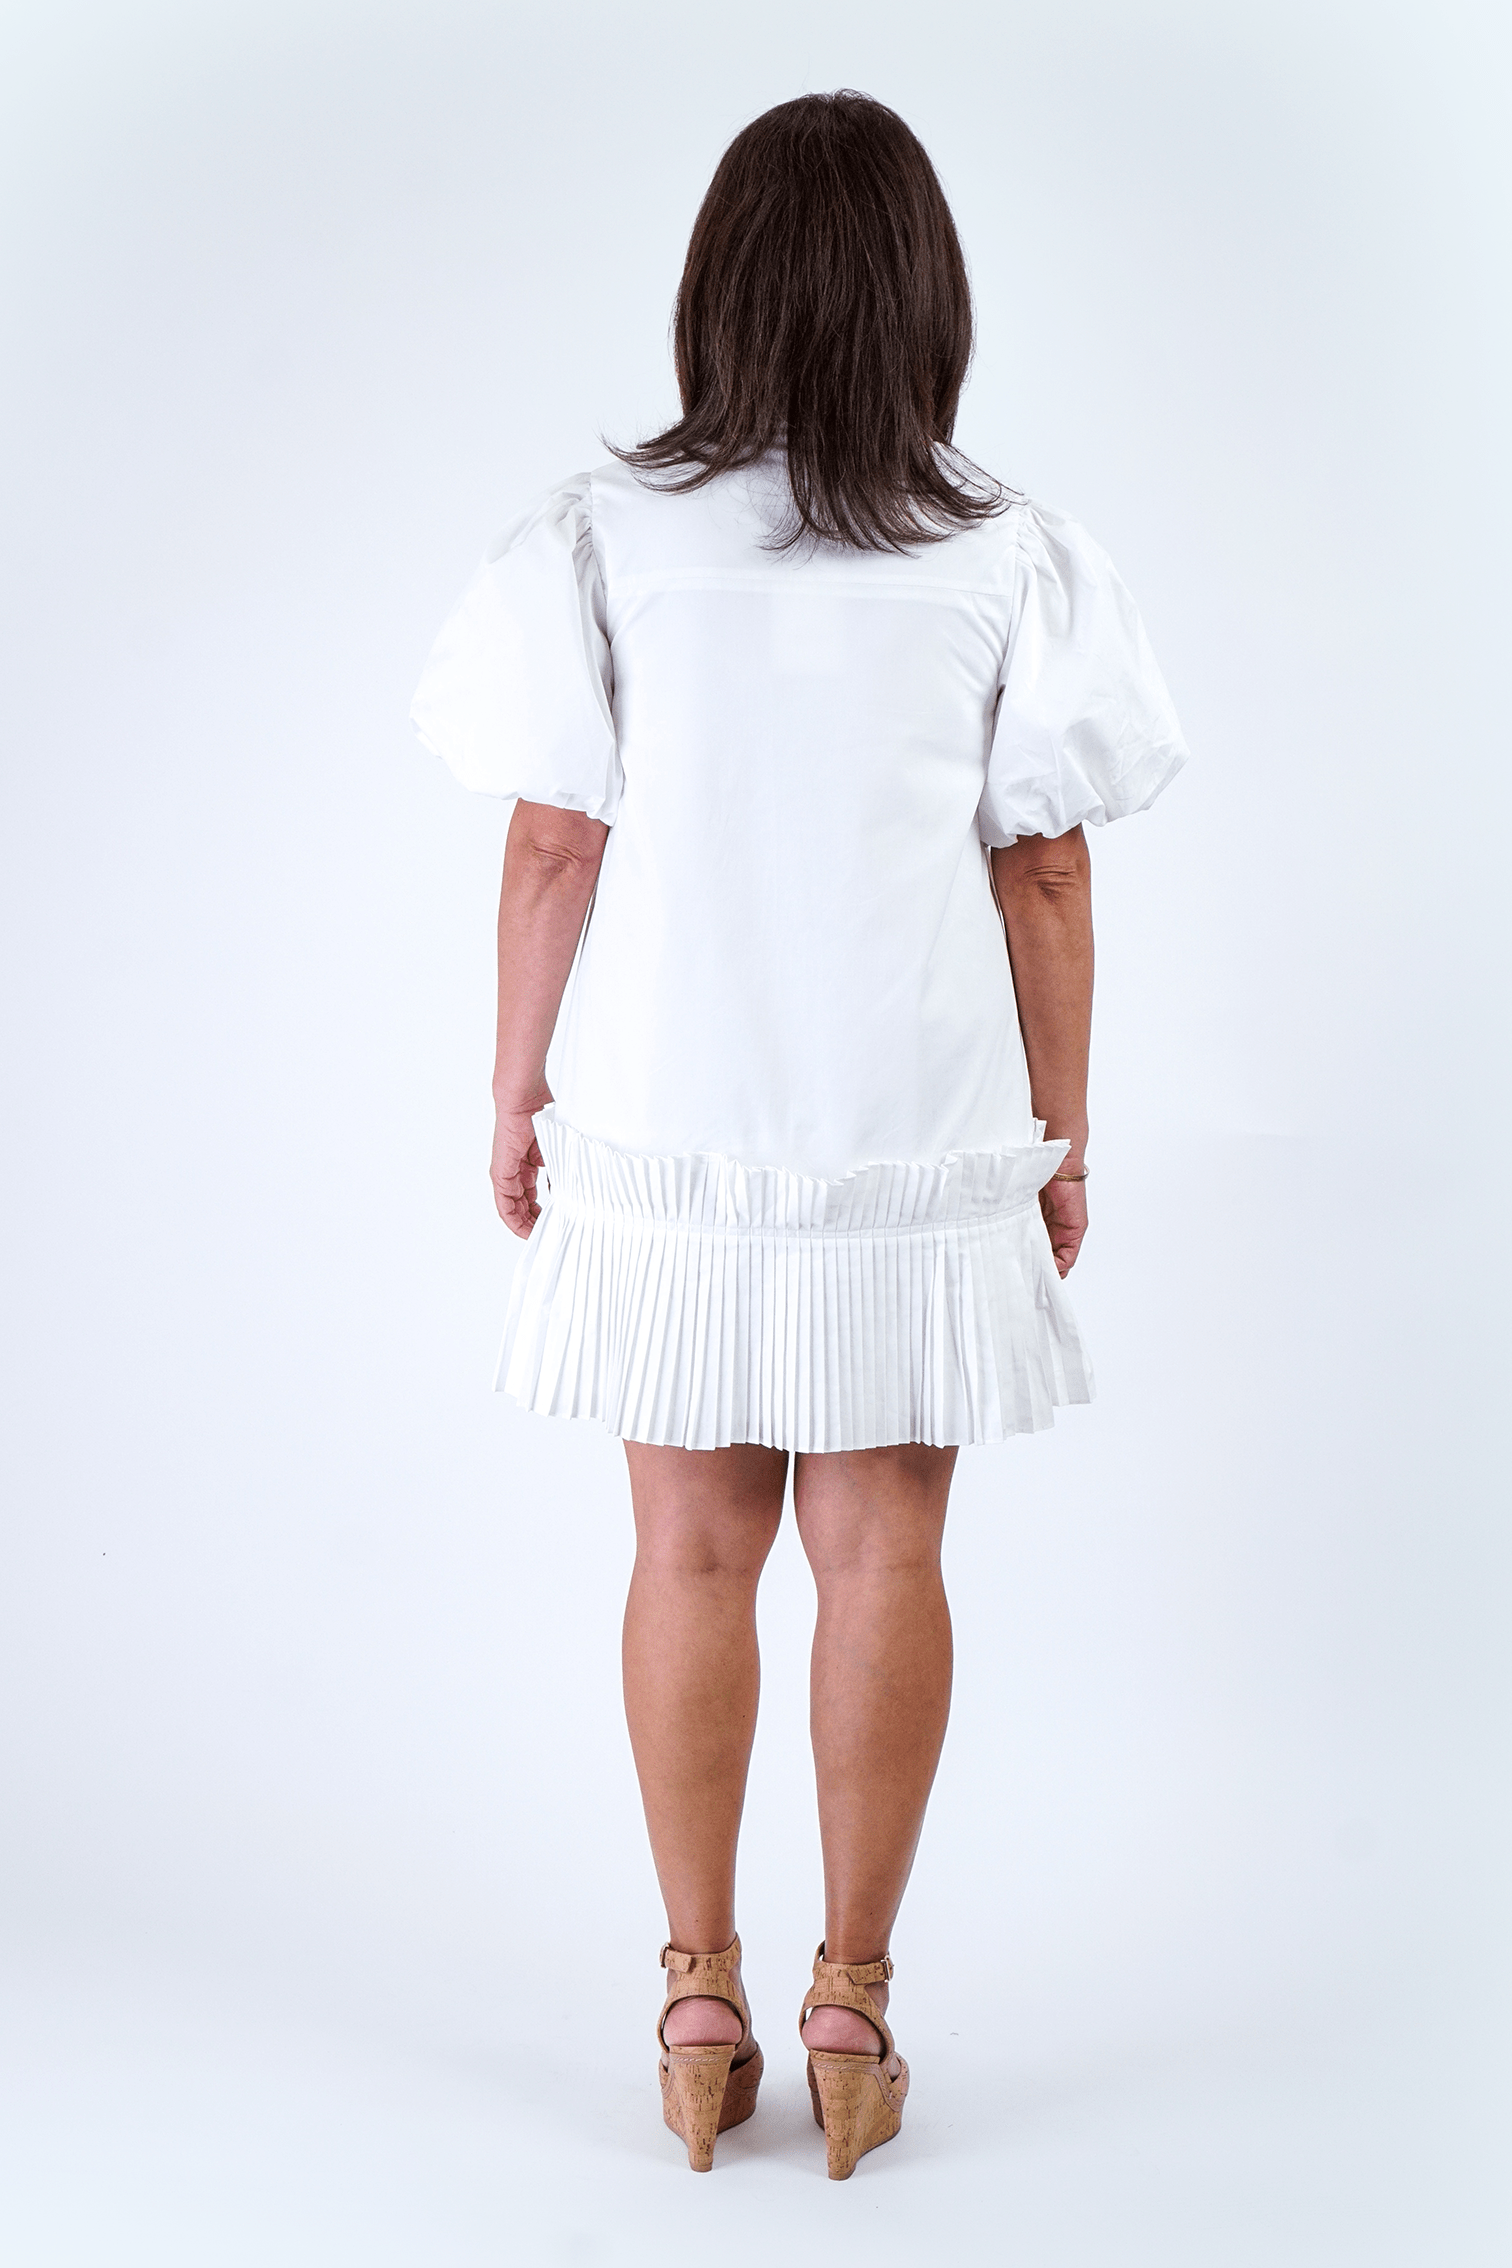 Chloe Dao Boutique DRESSES White Pleated Hem Shirt Dress